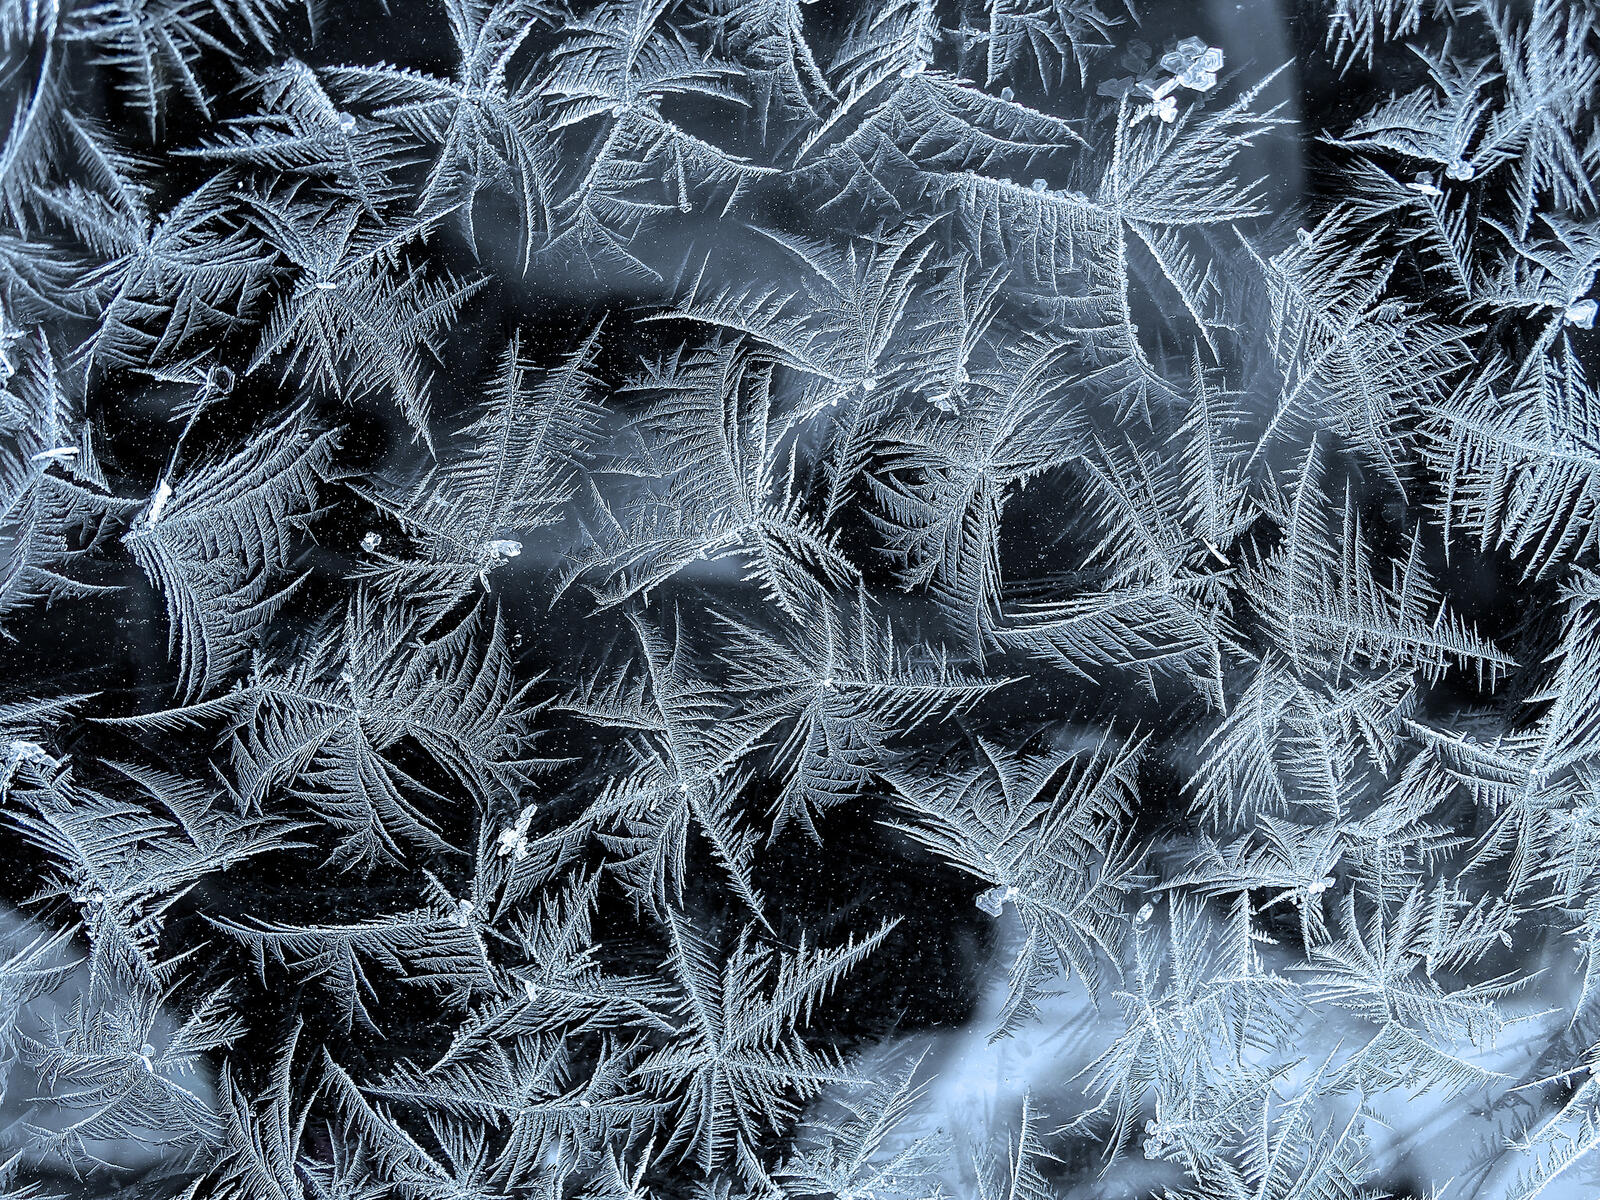 Wallpapers frozen glass glass frost on the desktop